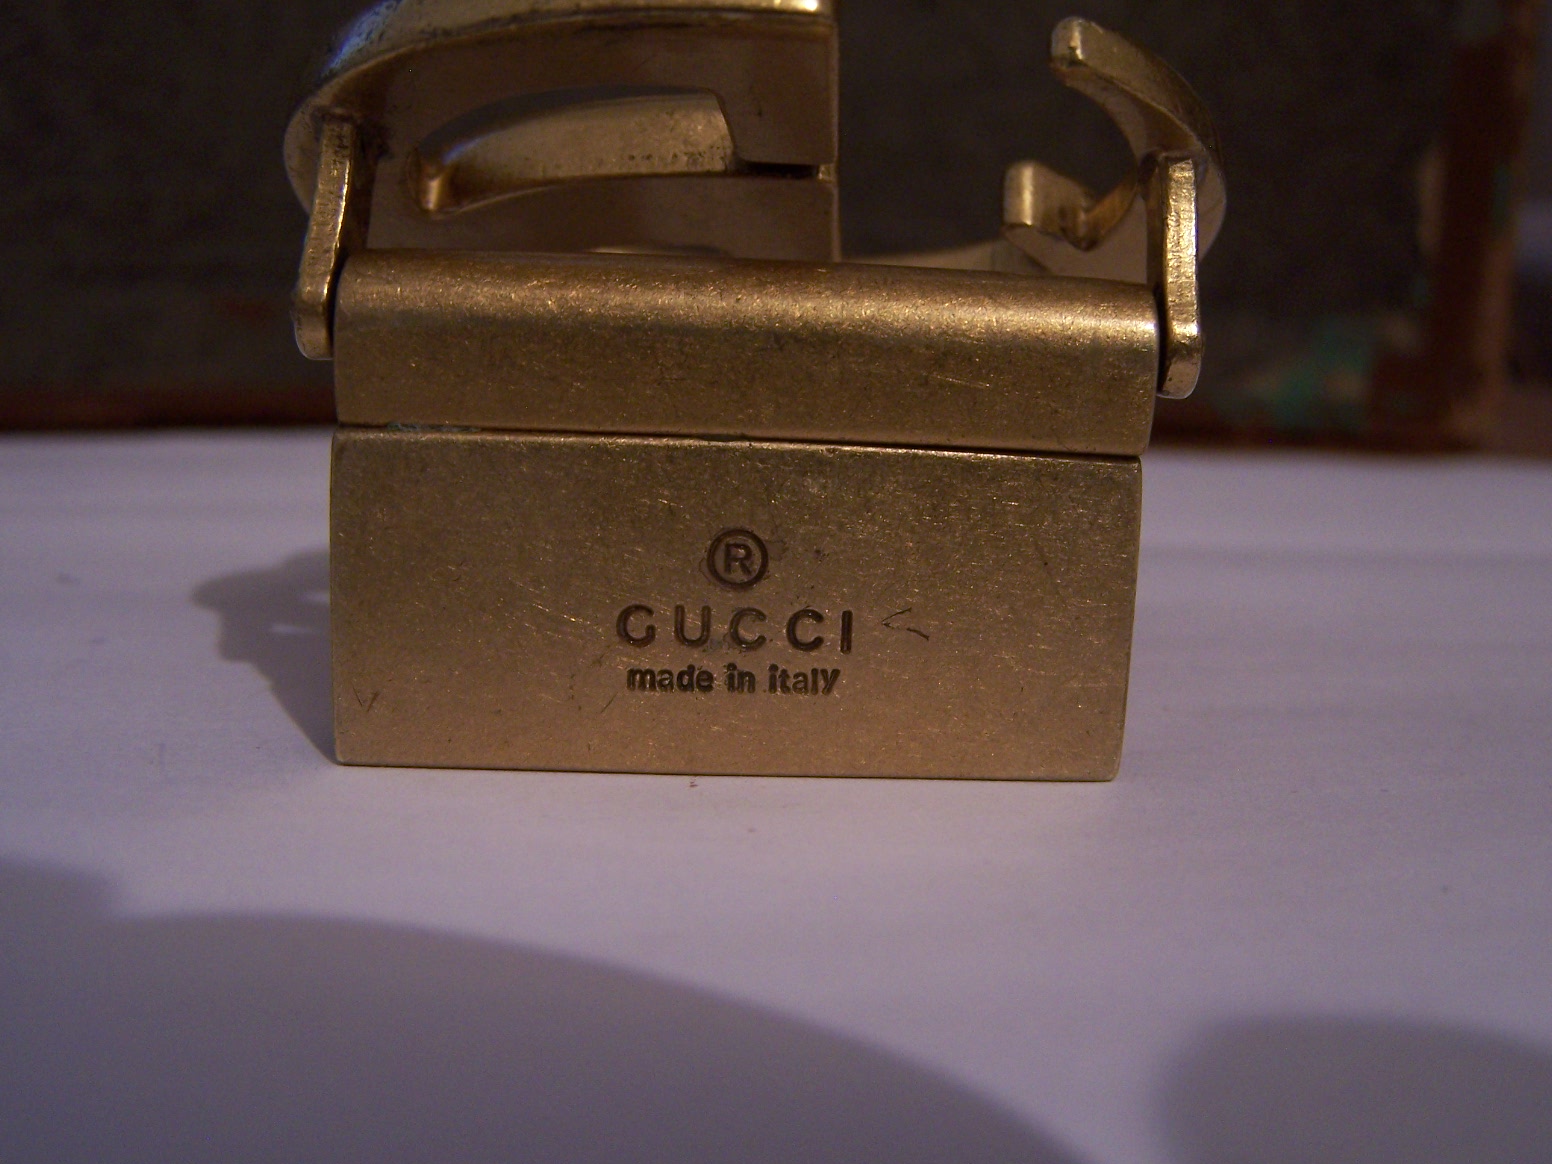 Do Gucci belt buckles tarnish? - Quora